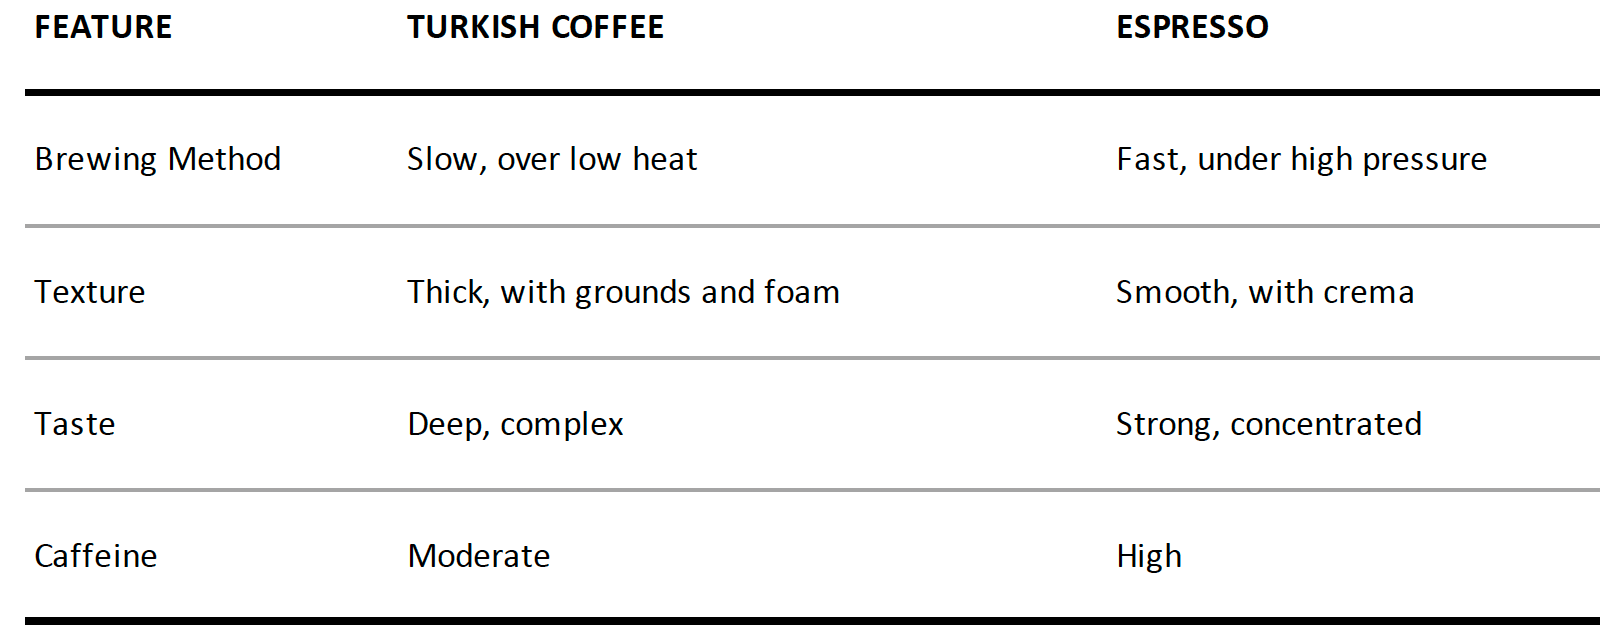 Turkish Coffee vs Espresso